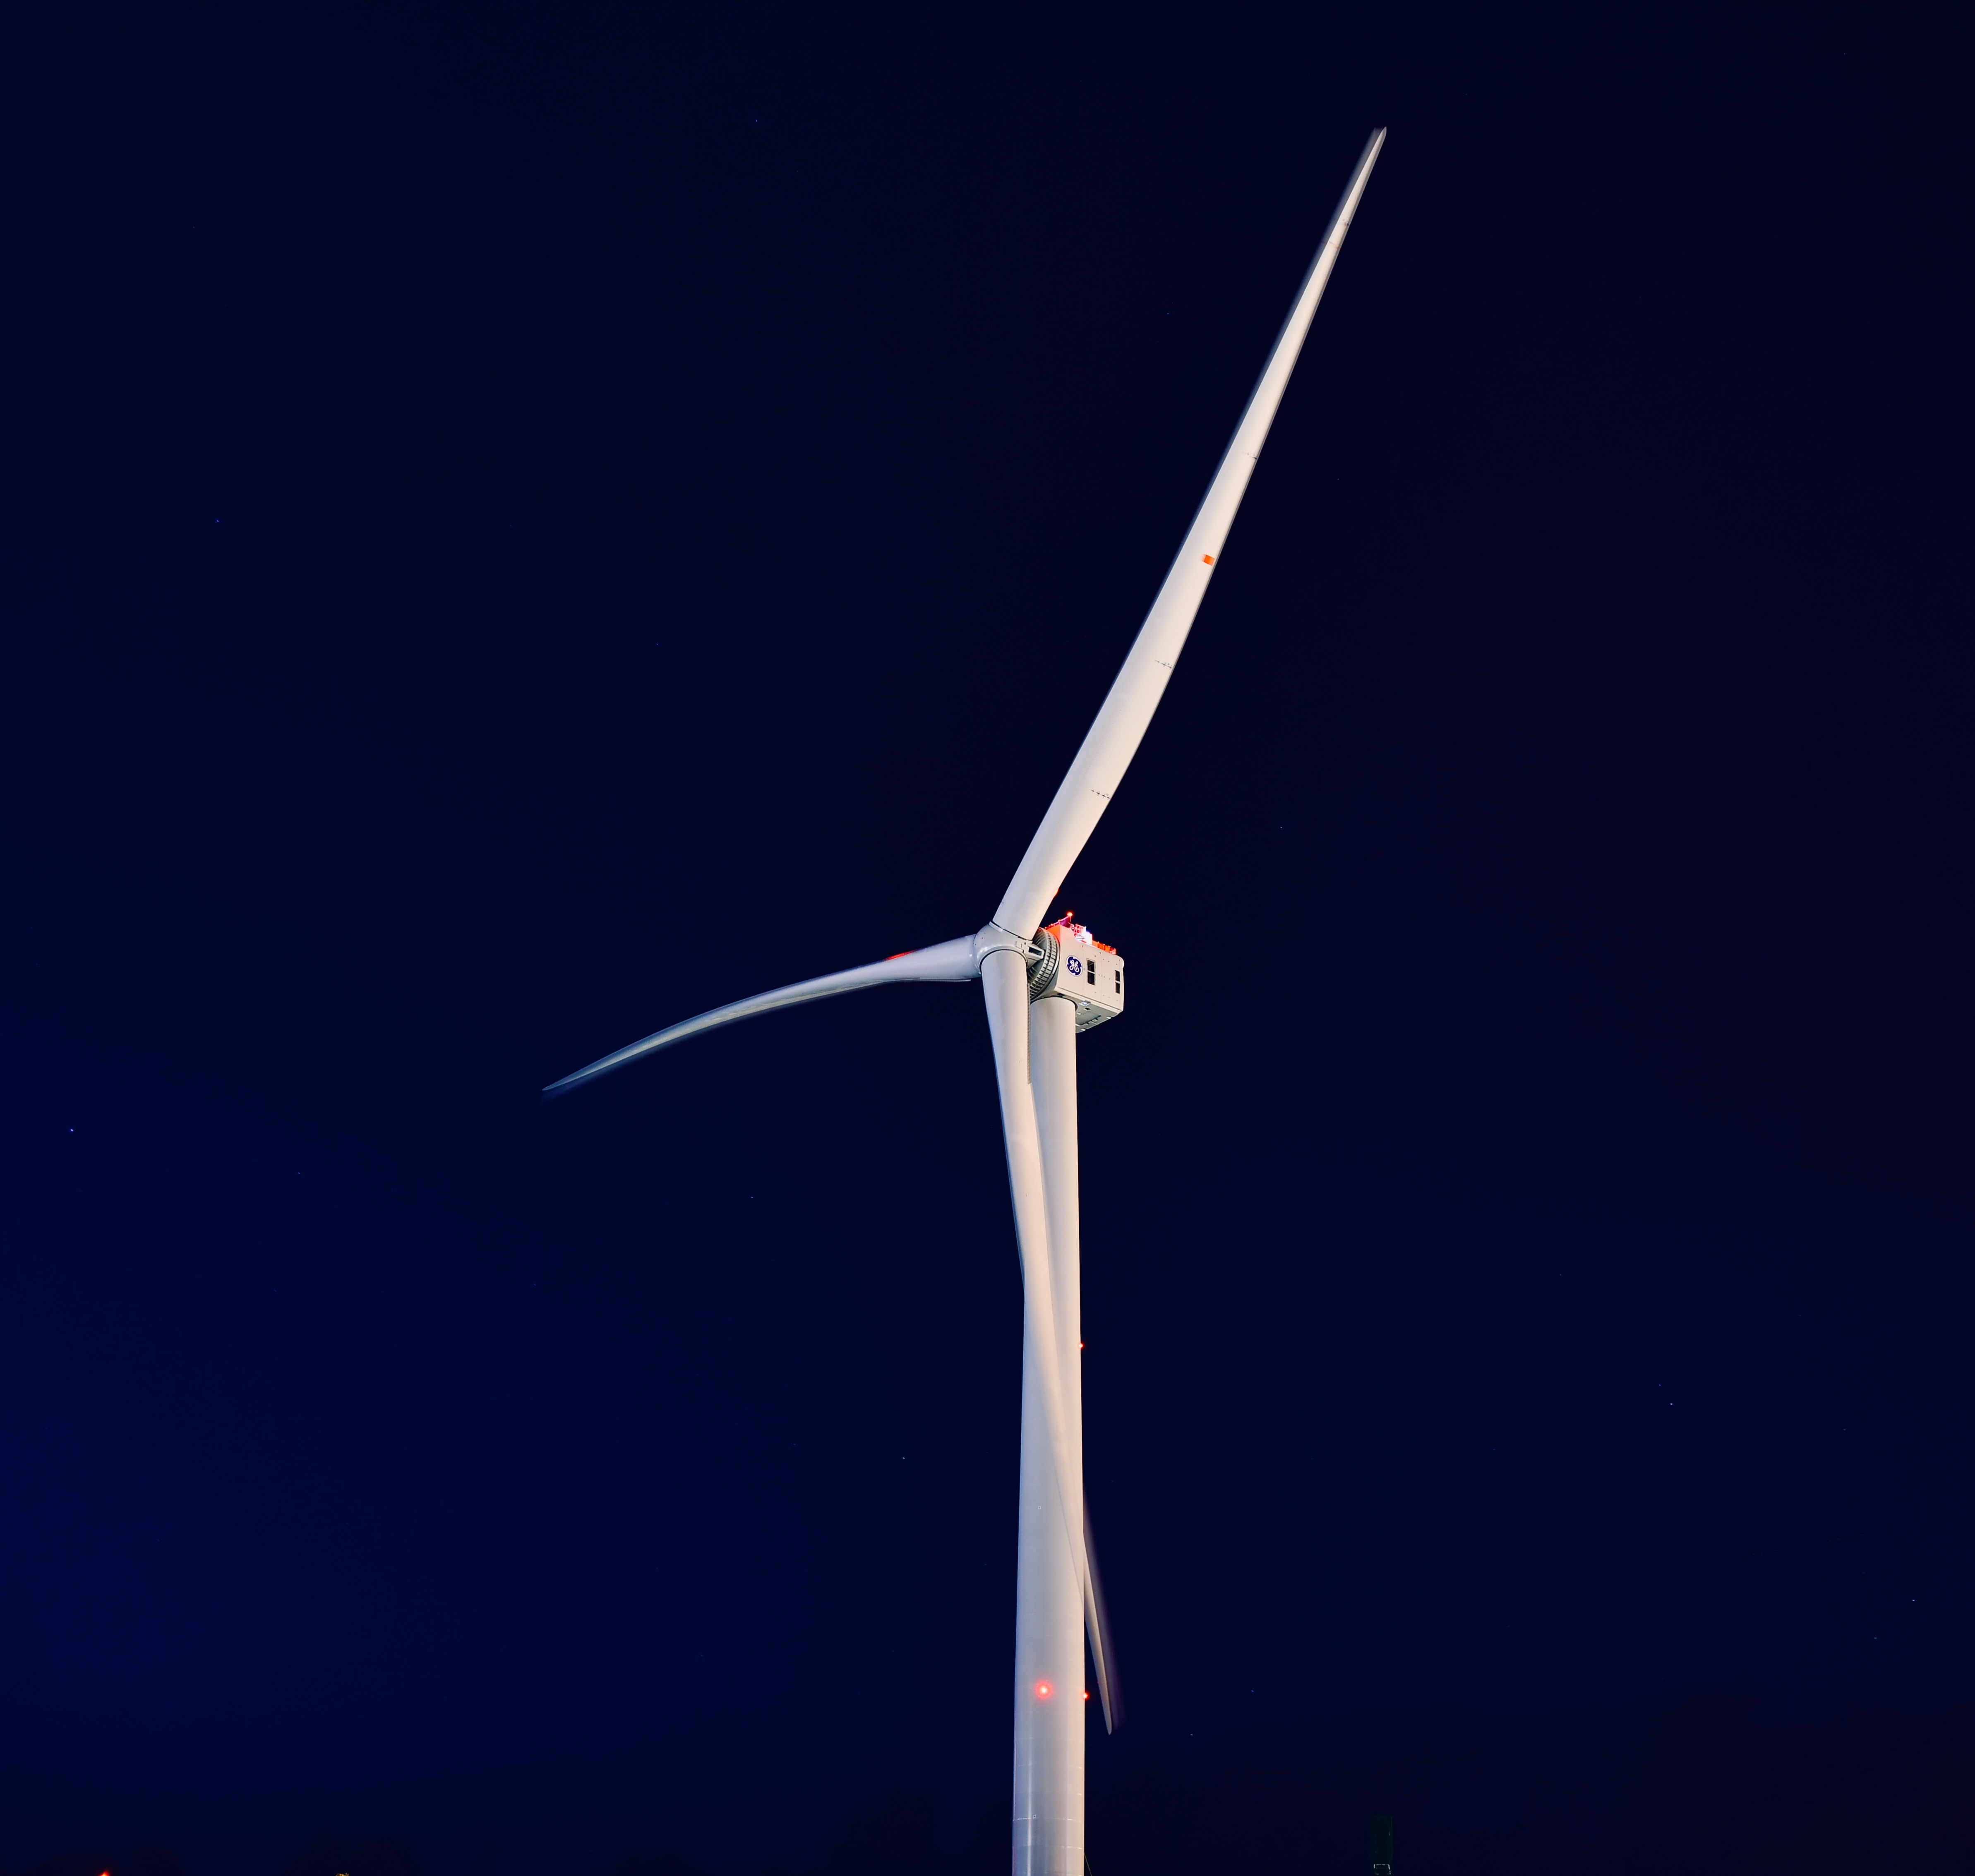 The prototype Haliade-X wind turbine installed in the Port of Rotterdam